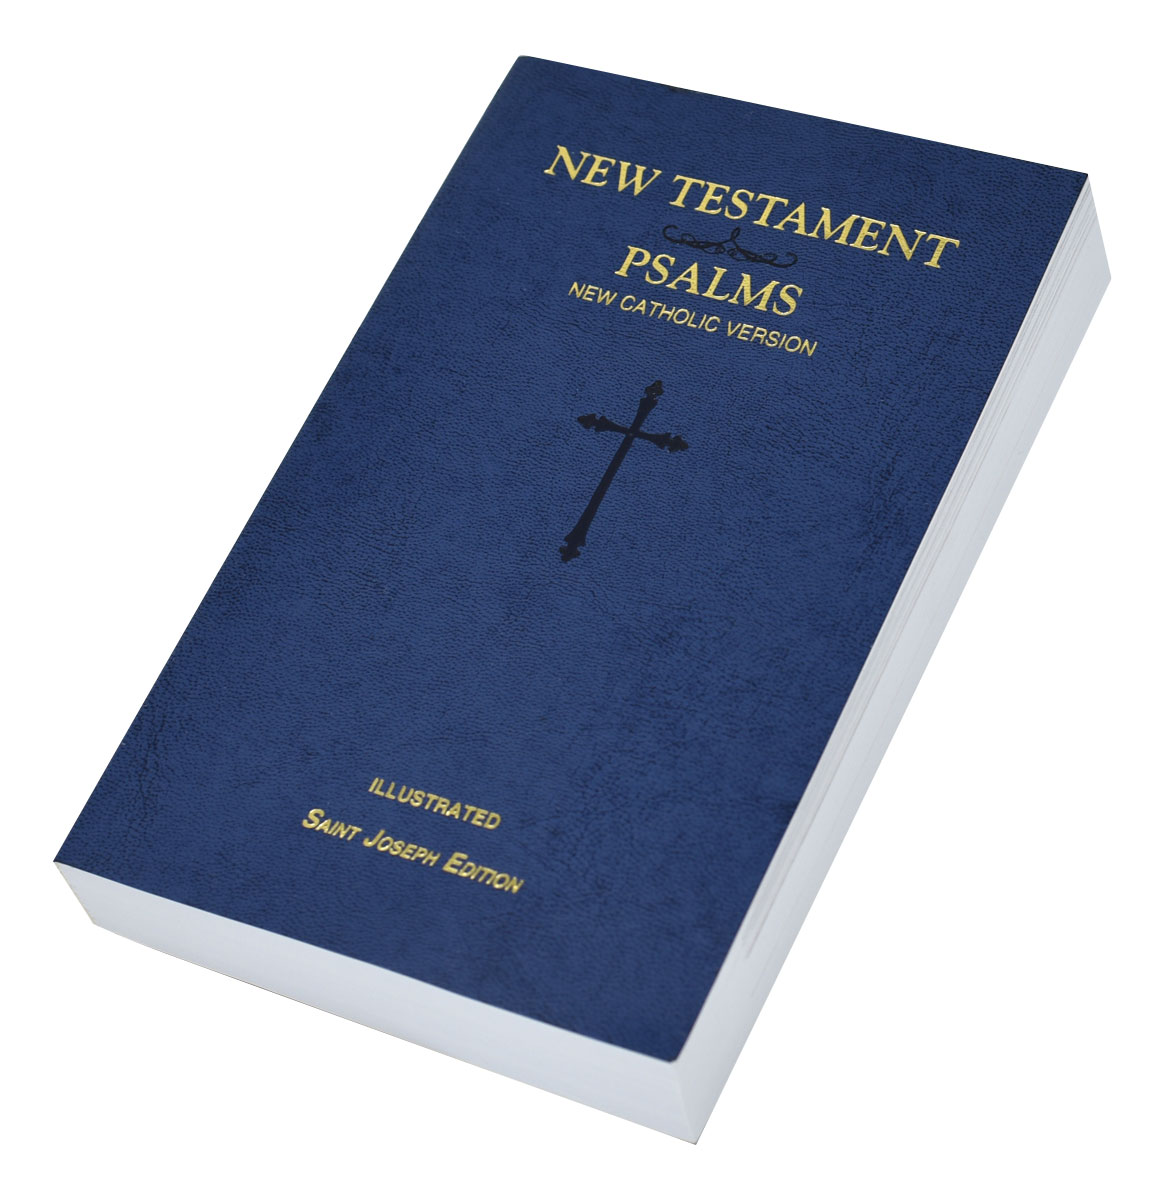 St. Joseph New Catholic Version New Testament and Psalms Blue Flexible Cover 647/04BLU